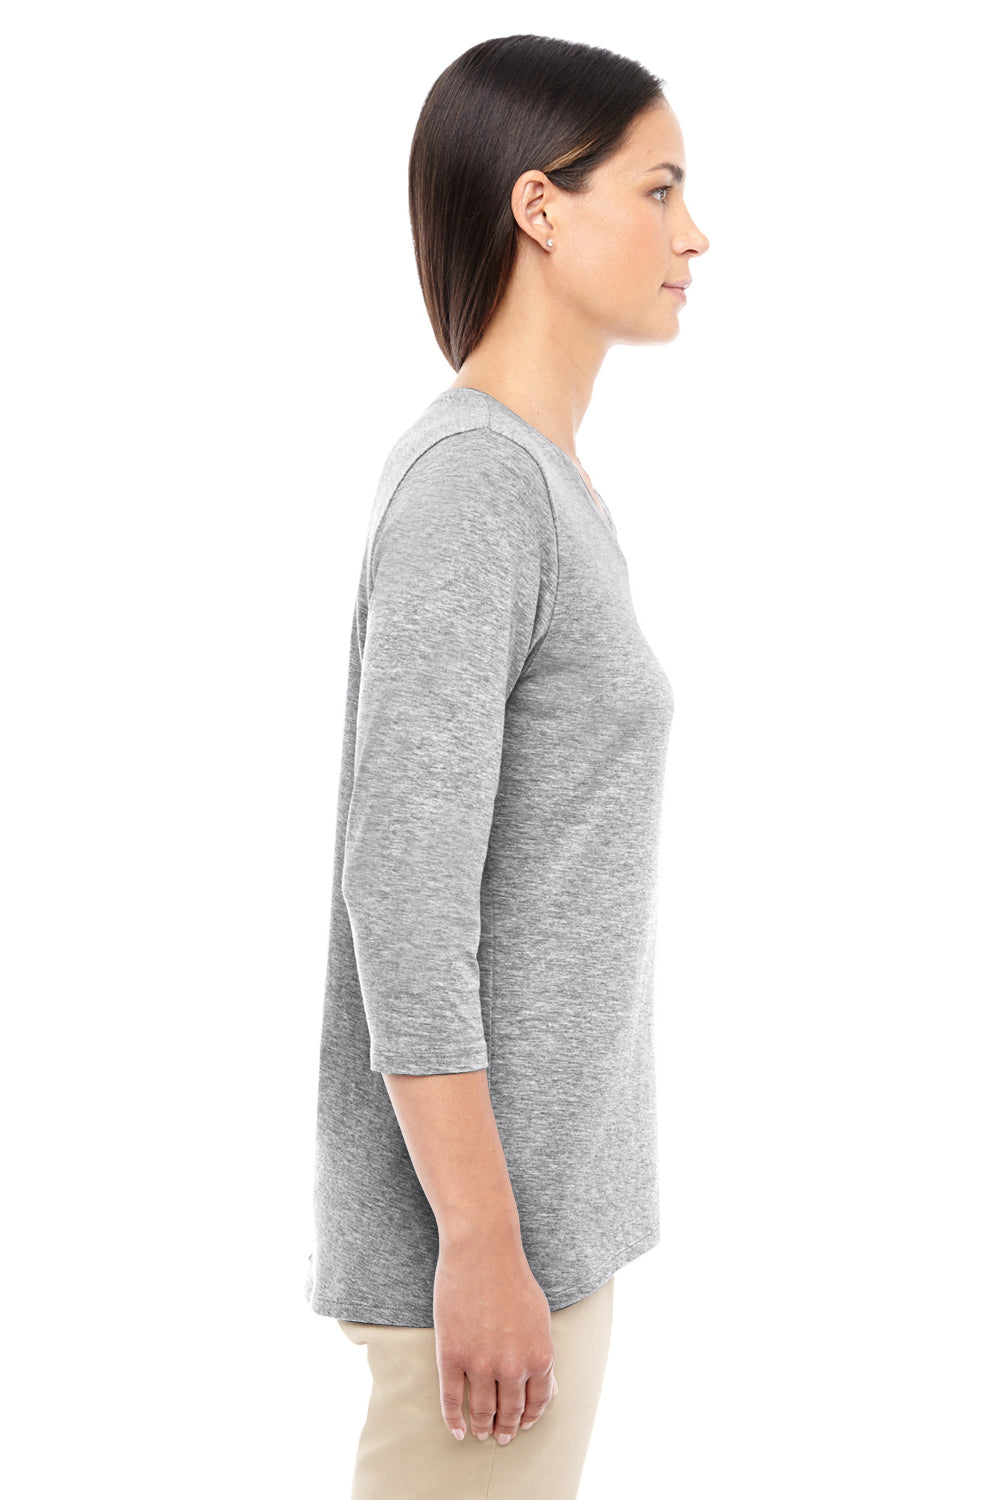 Devon & Jones DP184W Womens Perfect Fit 3/4 Sleeve V-Neck T-Shirt Heather Grey Side